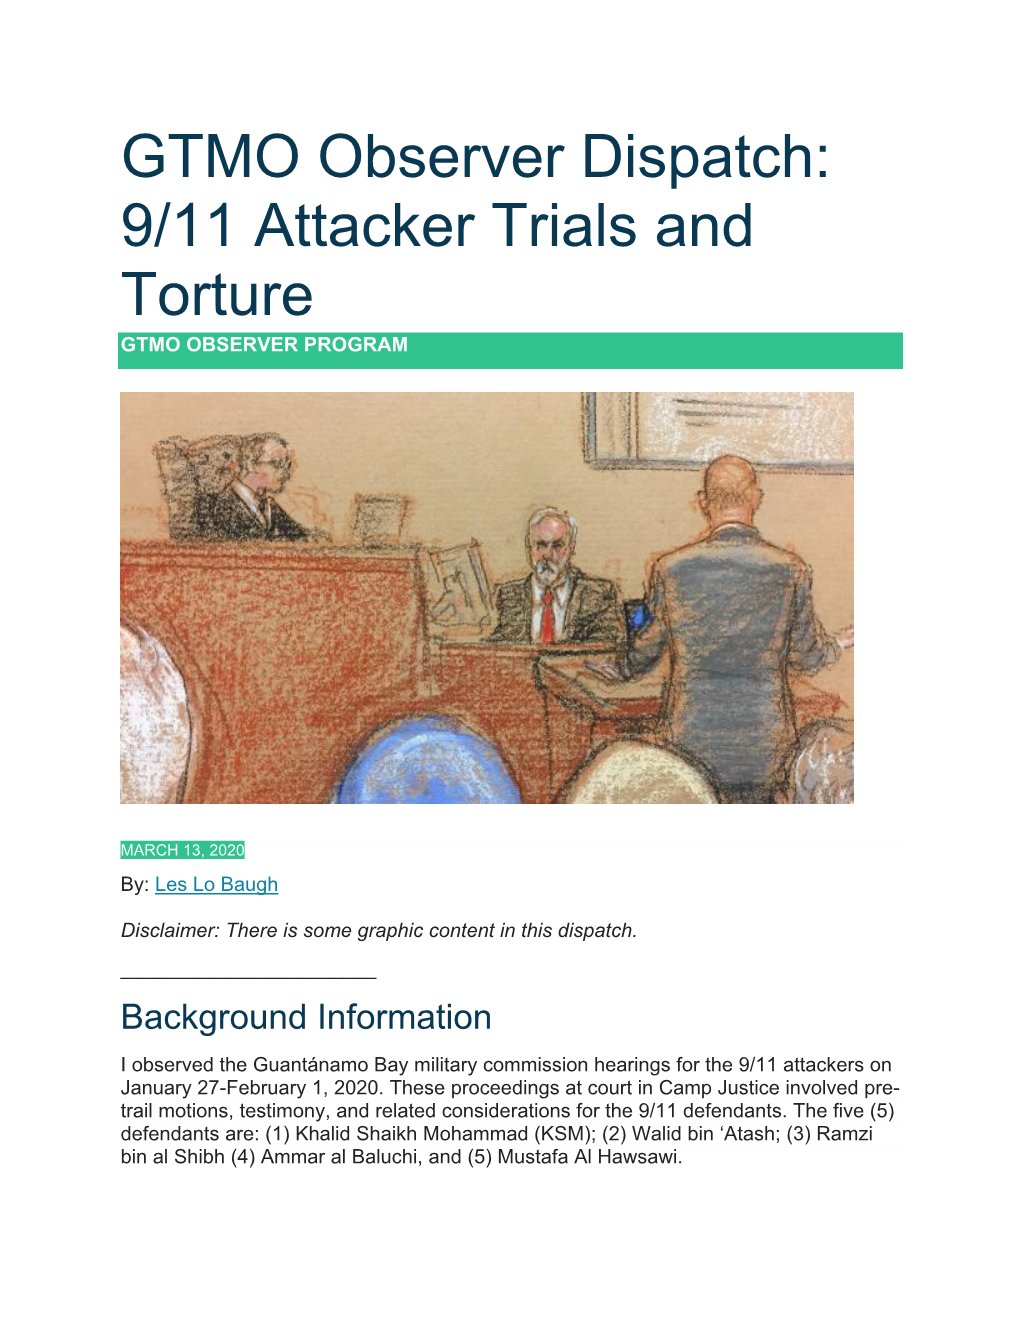 GTMO Observer Dispatch: 9/11 Attacker Trials and Torture GTMO OBSERVER PROGRAM